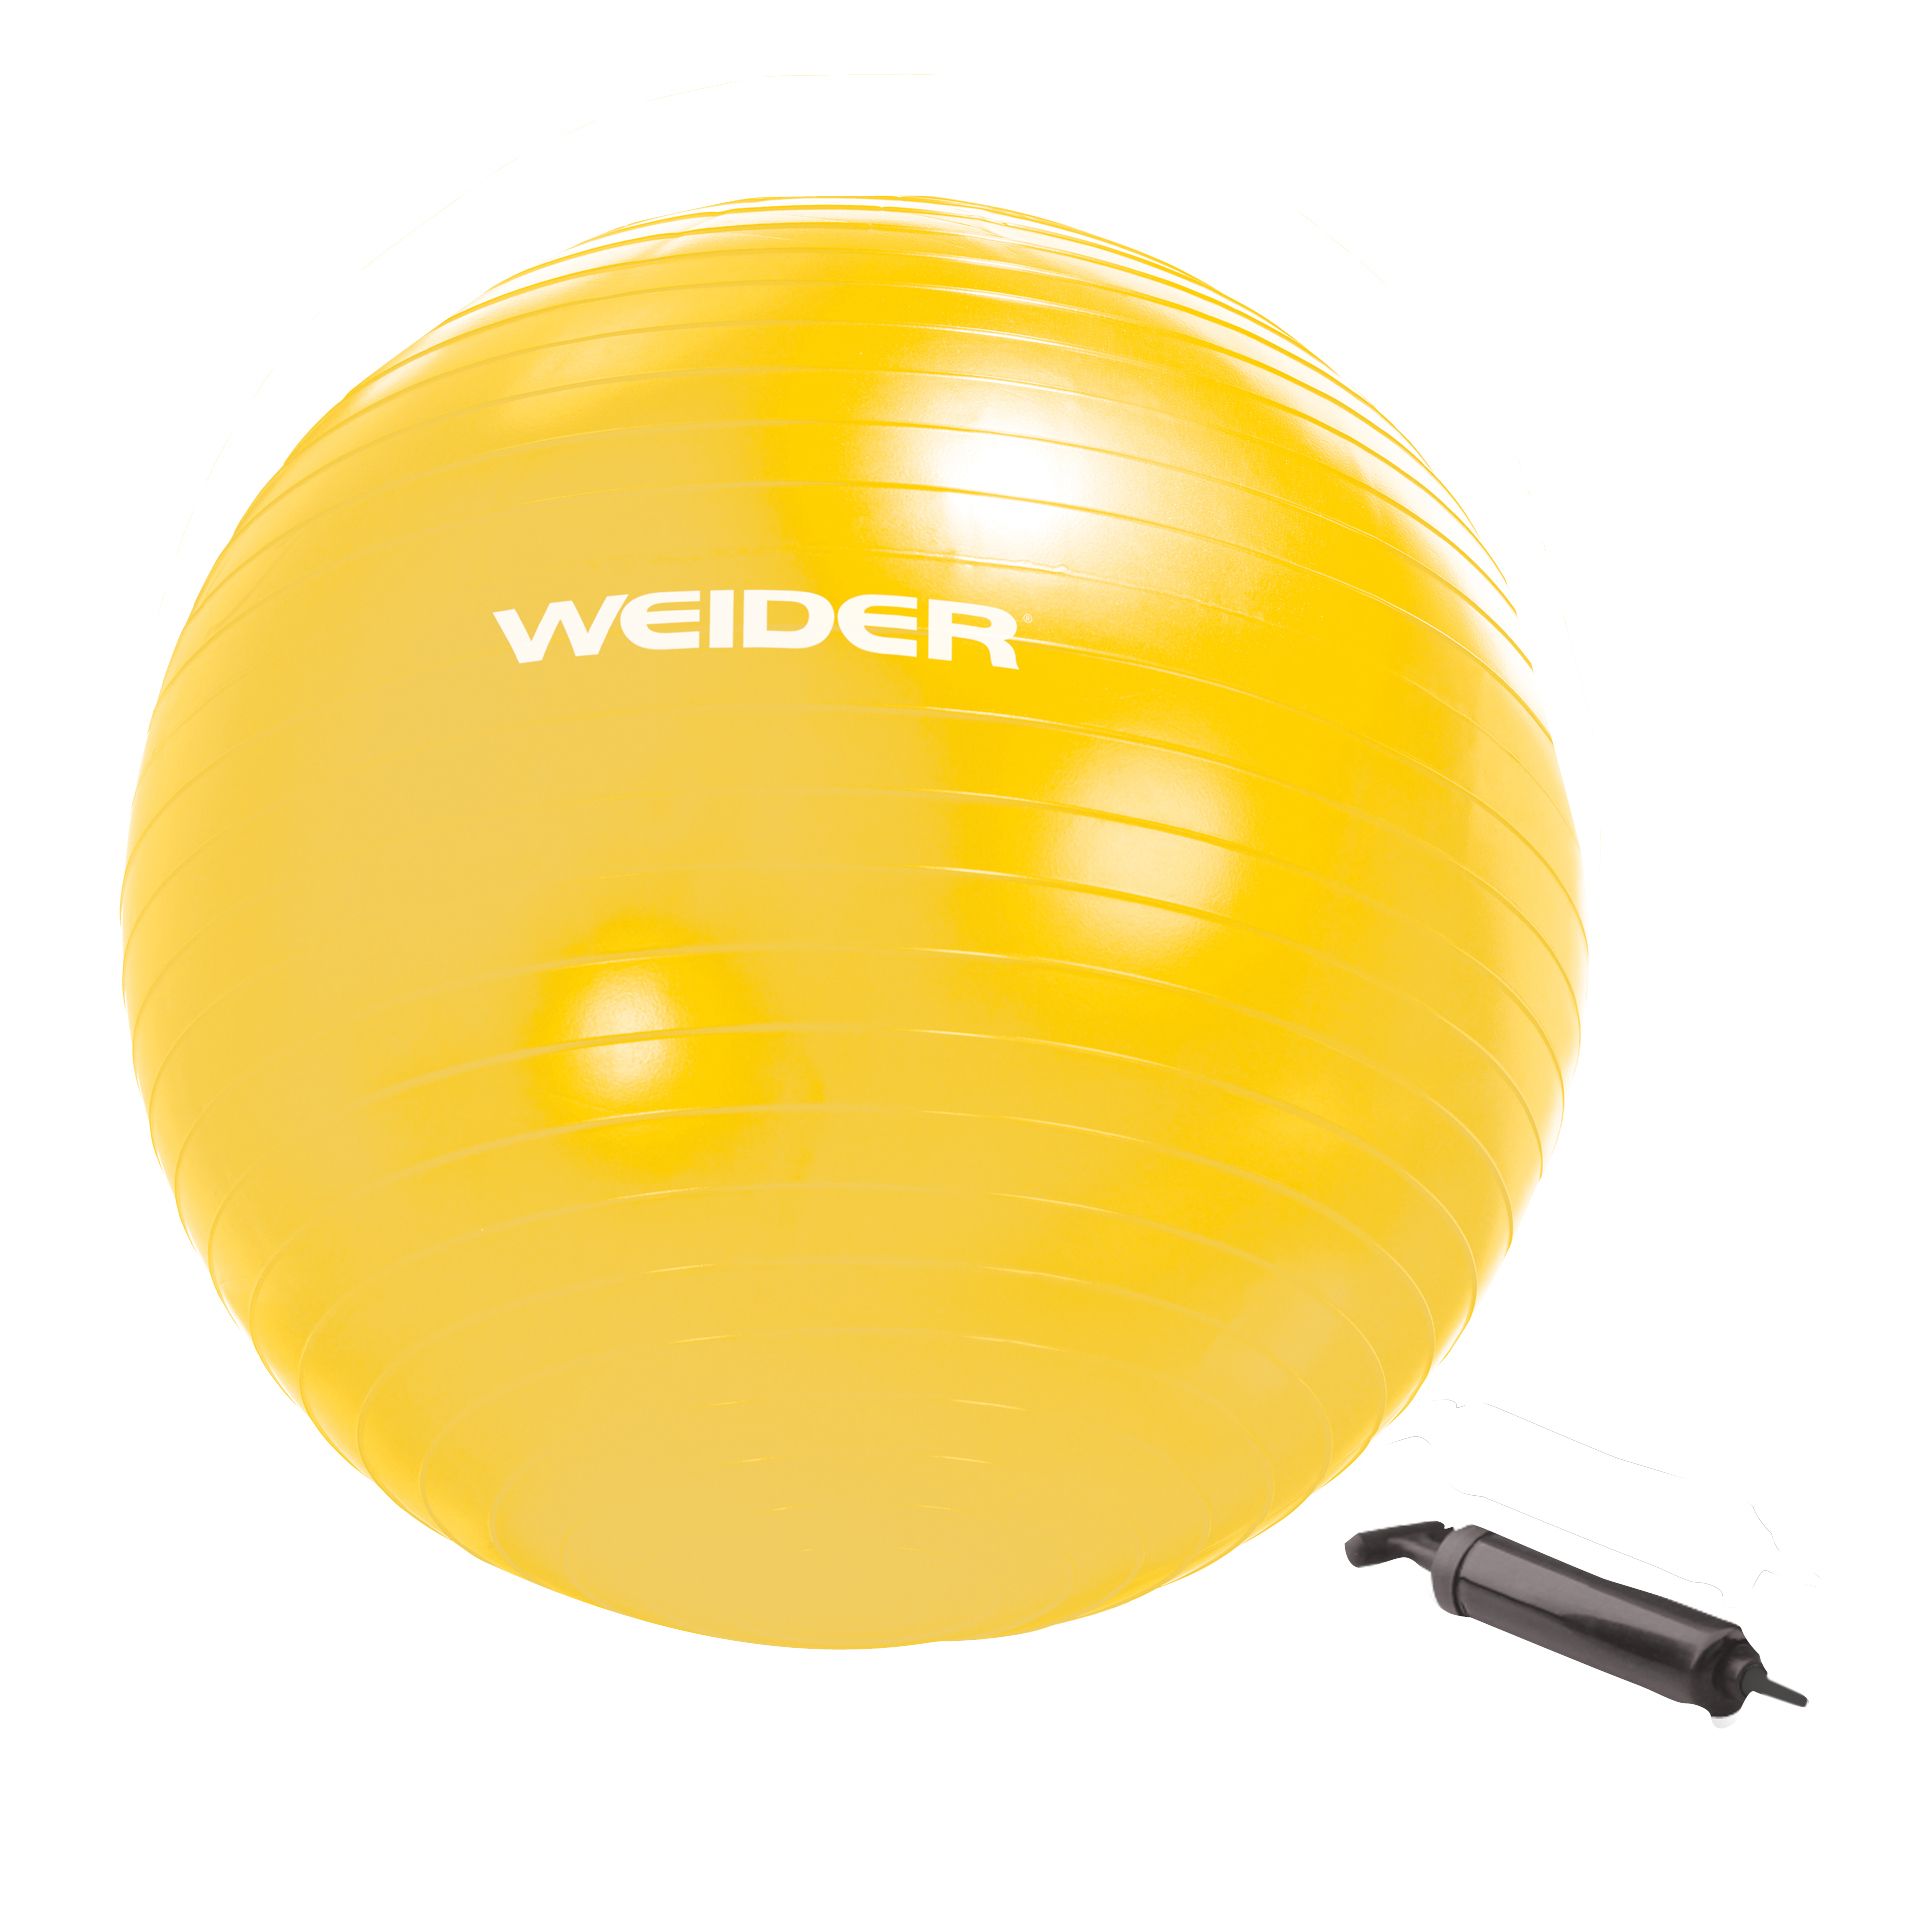 Weider 55cm Stability Ball